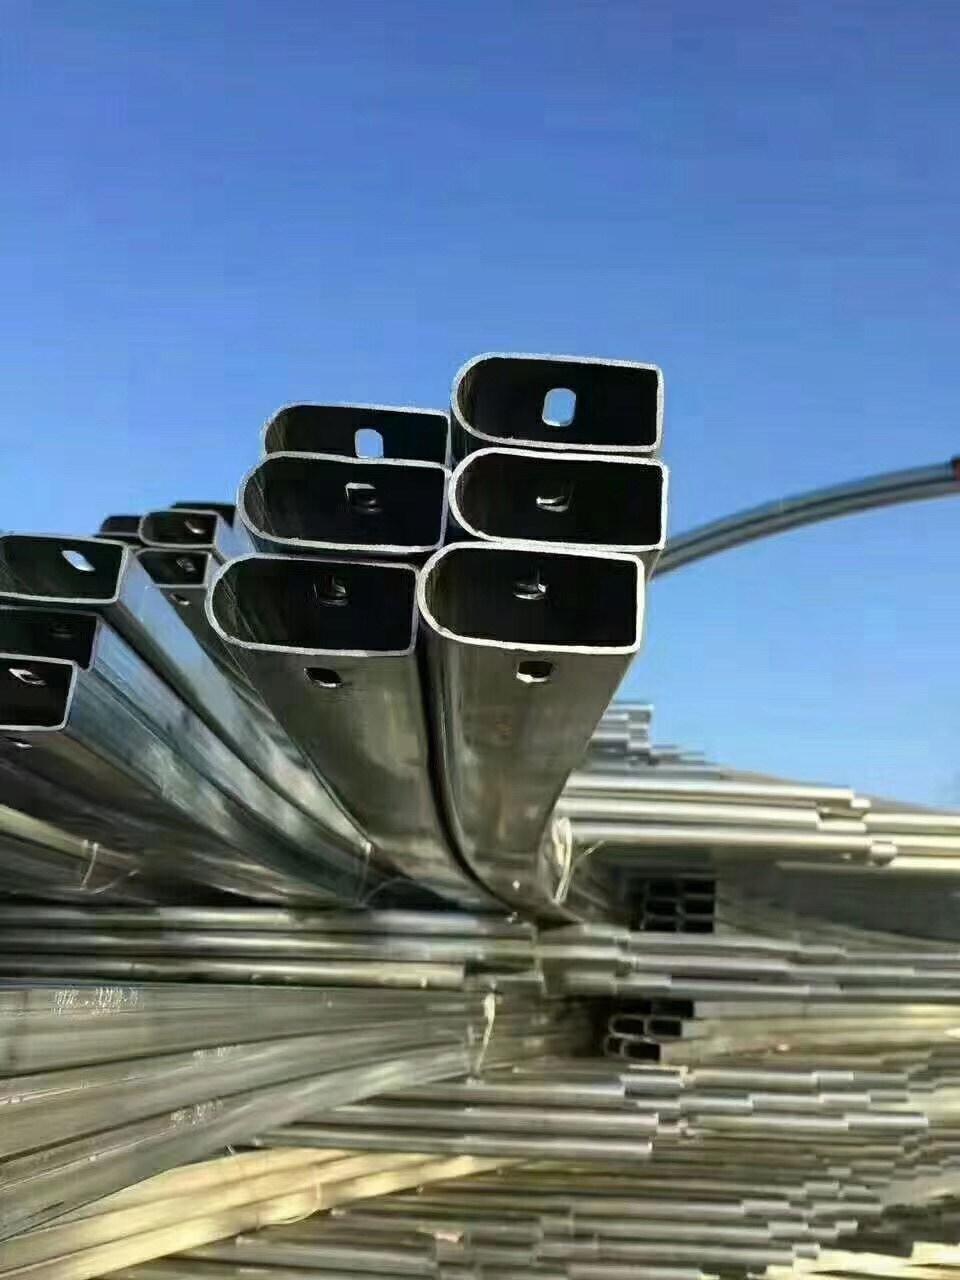 good quality Galvanized surface D shape steel tube